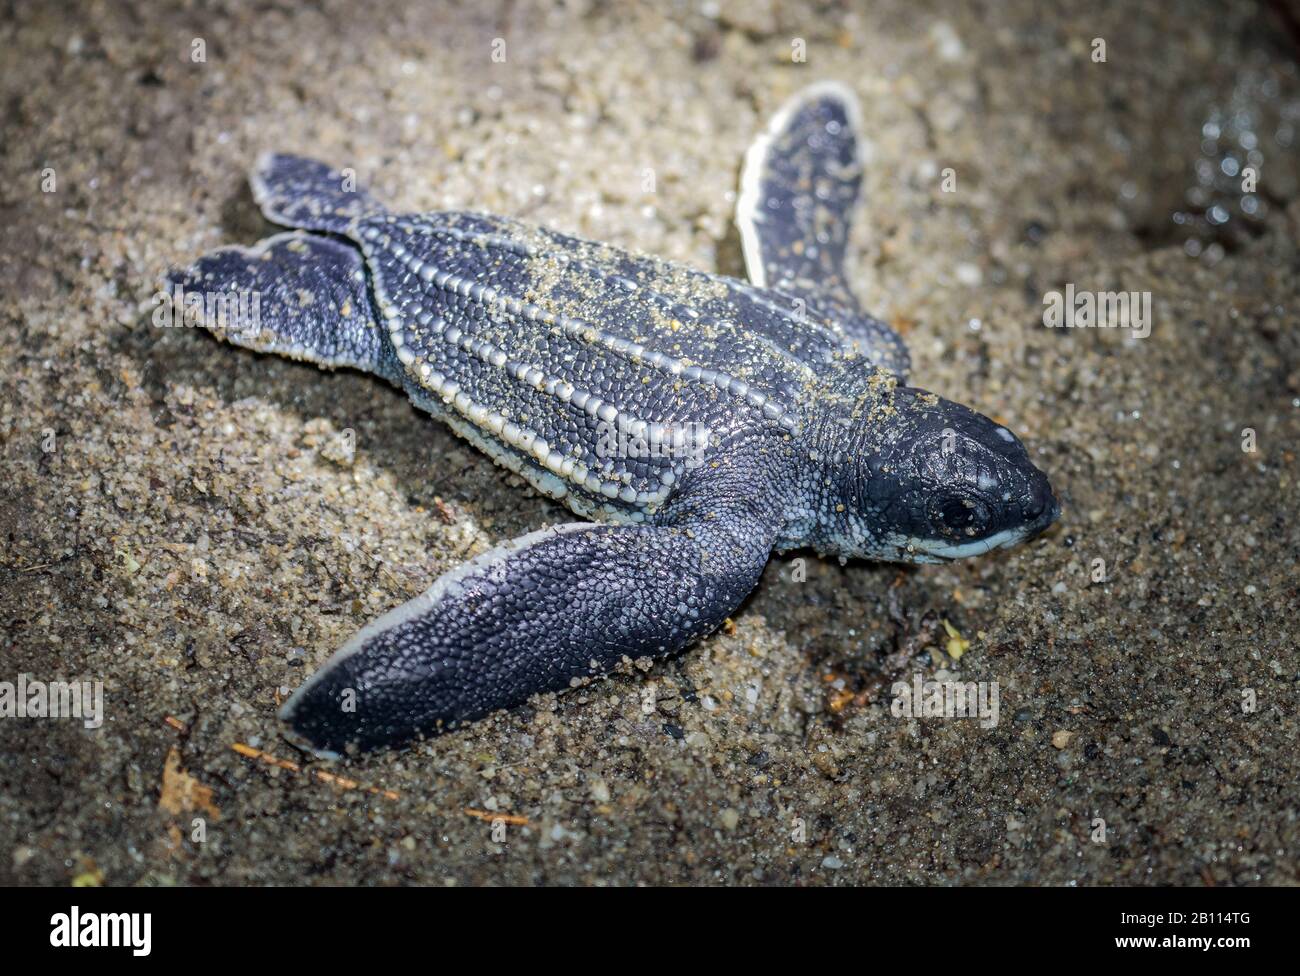 Tartaruga marina leatherback, leatherback, tartaruga leathery, luth tartaruga (Dermochelys coriacea), la più grande tartaruga vivente, giovane animale sulla spiaggia, Trinidad e Tobago, Trinidad Foto Stock